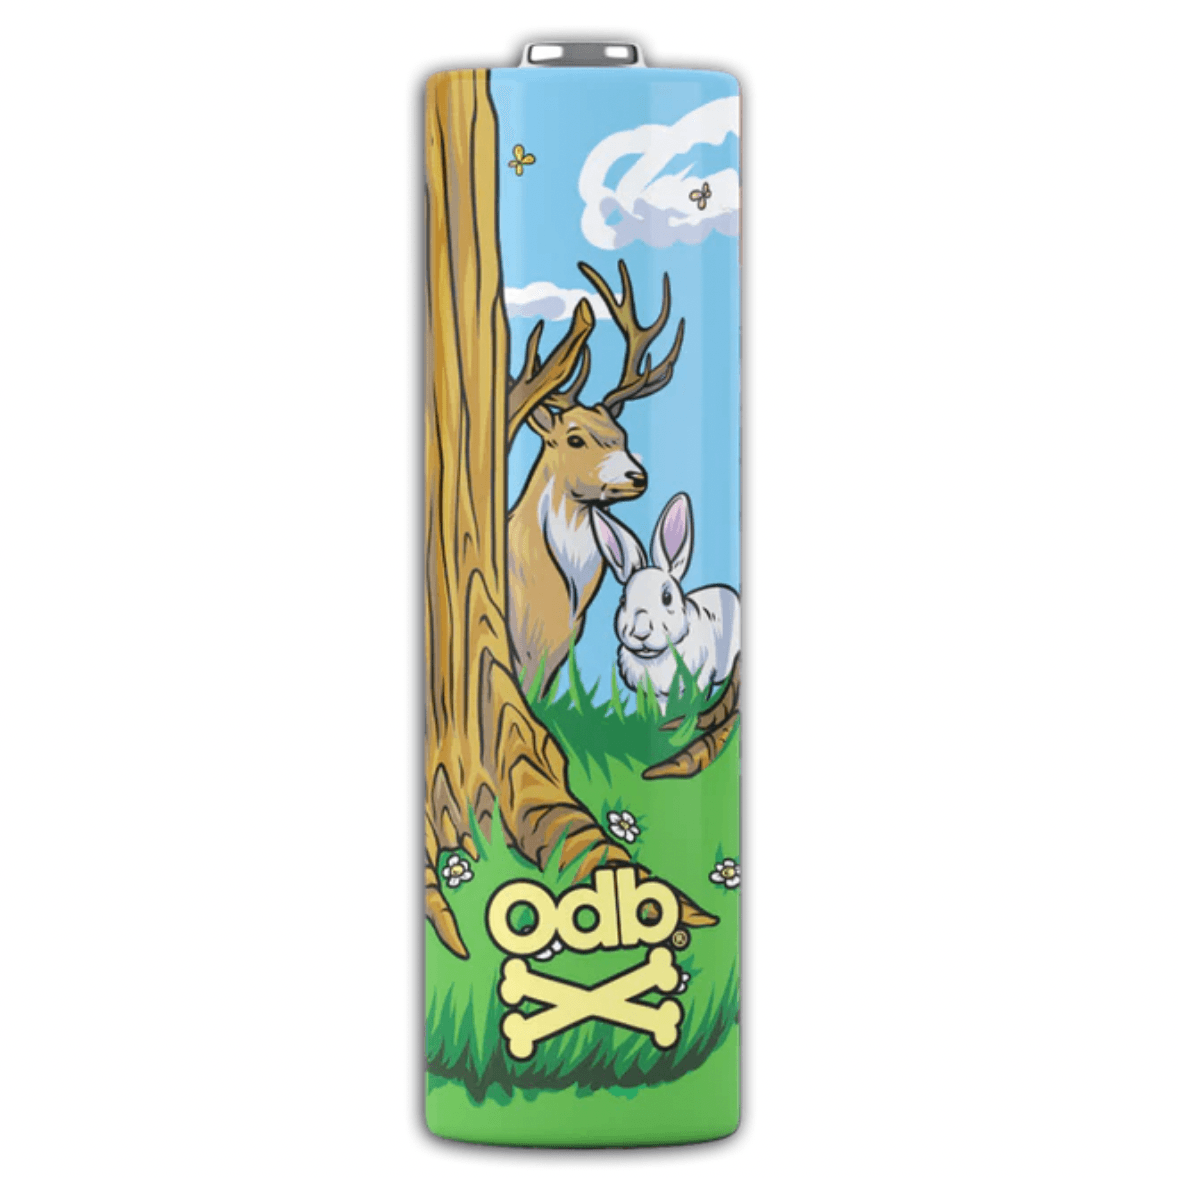 Cute - ODB 18650 Battery Wrap, [product_vandor]